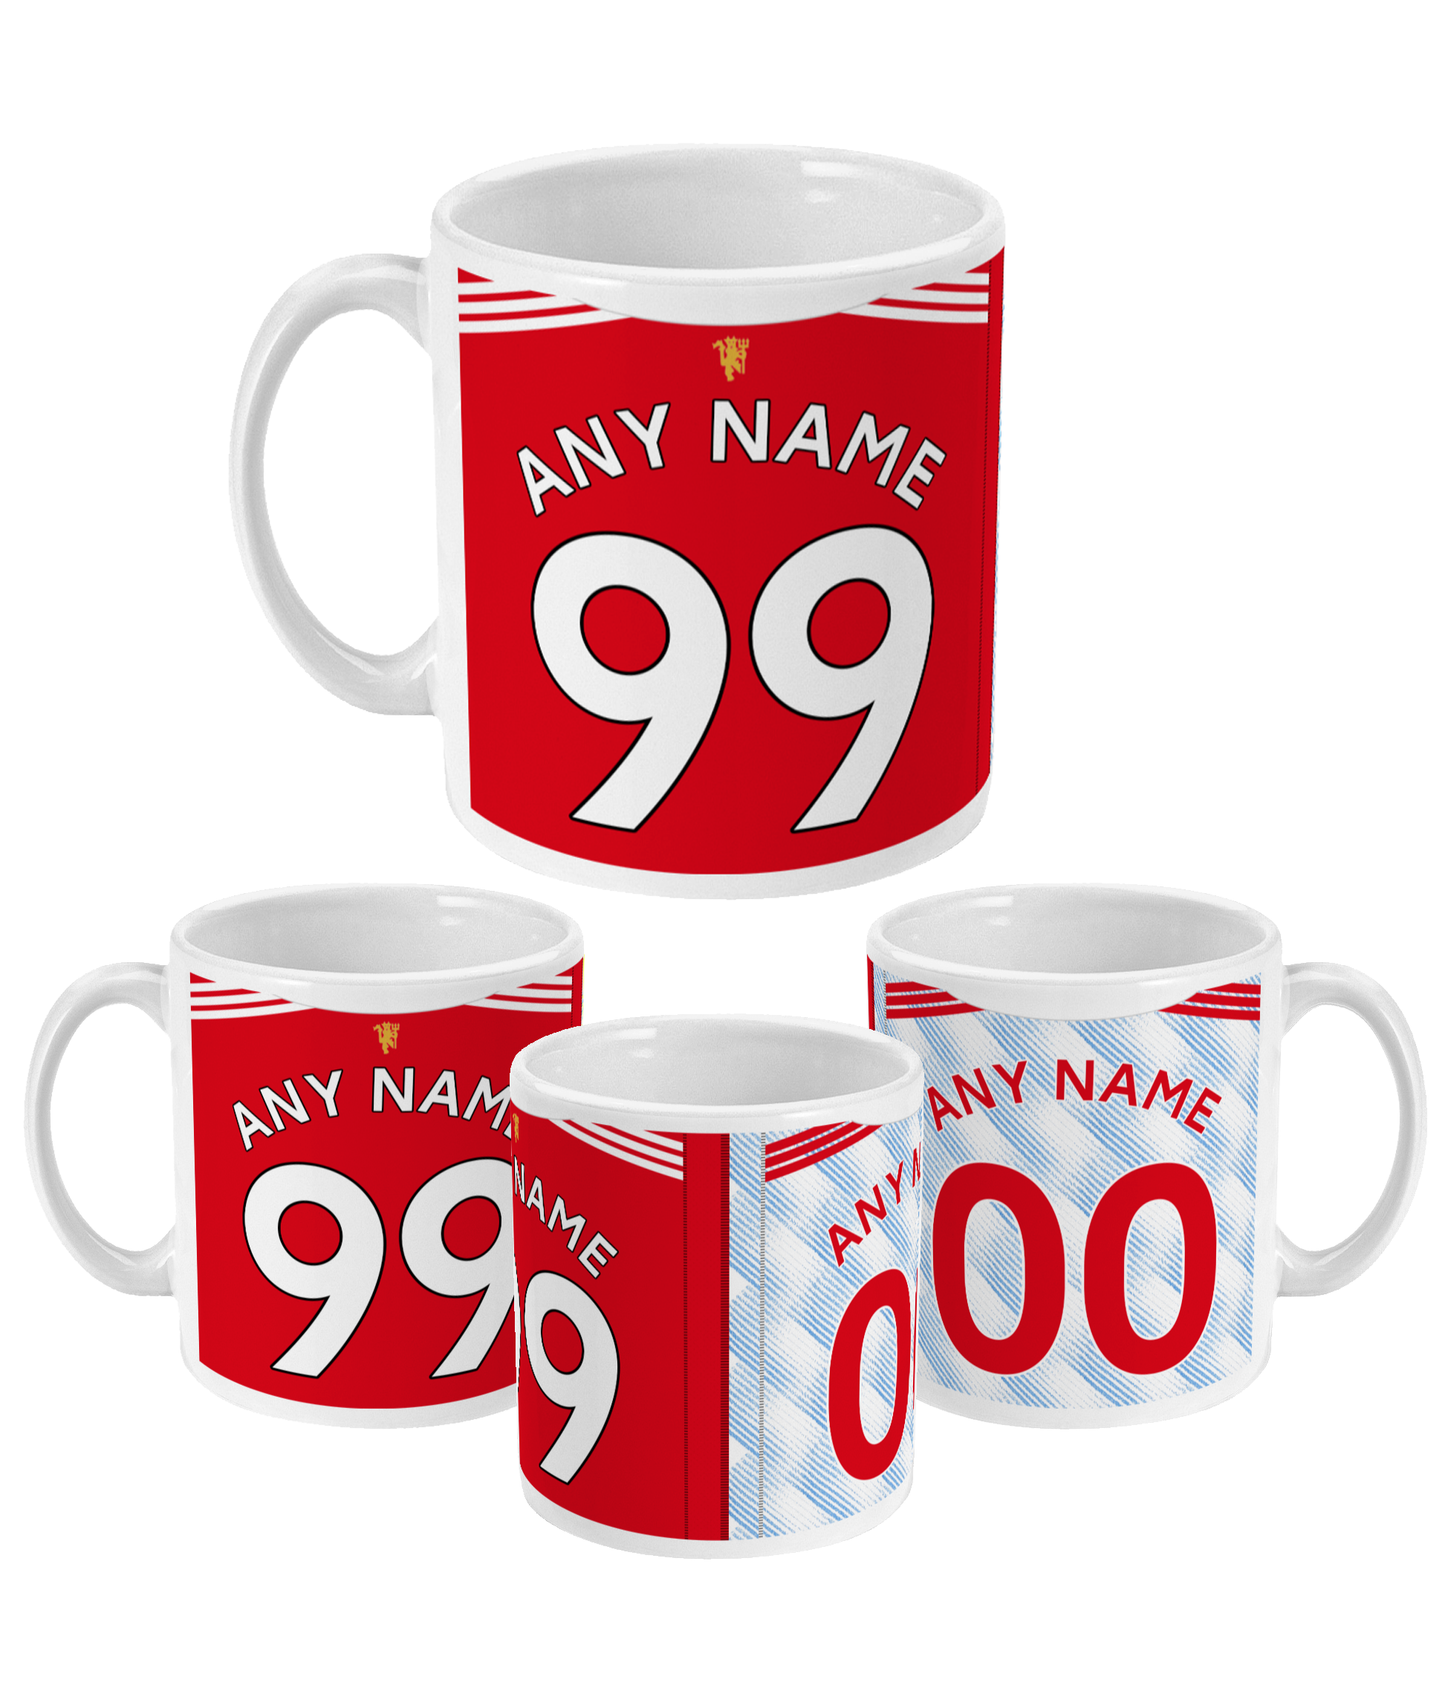 Man United - Personalised 2021/22 Home/Away Mug